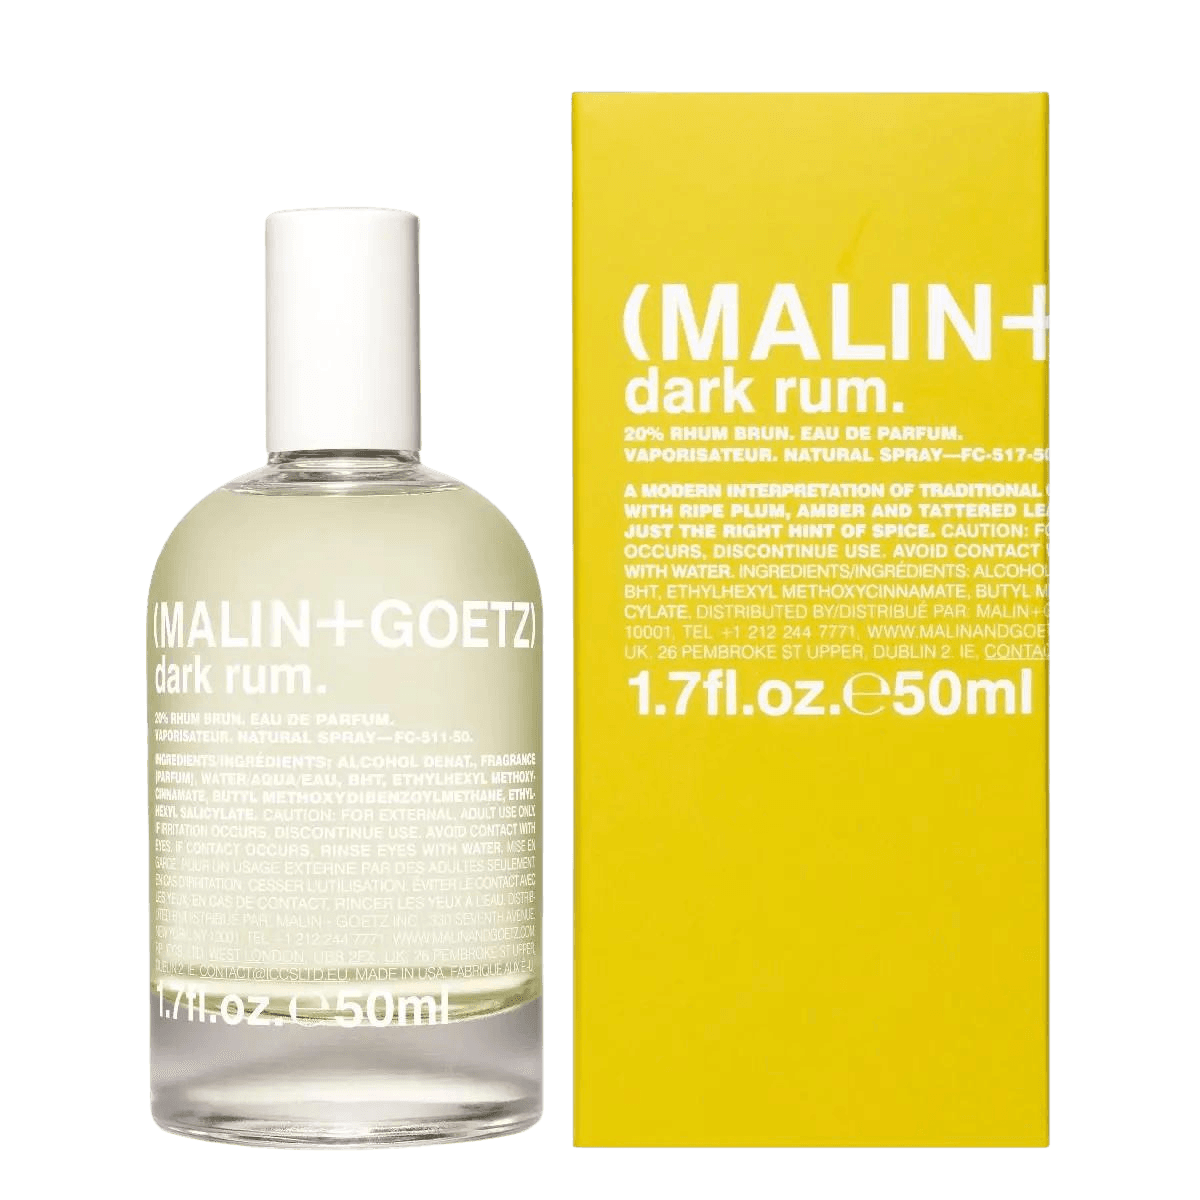 Malin + Goetz - Dark rum eau de parfum 50 ml with box | Perfume Lounge